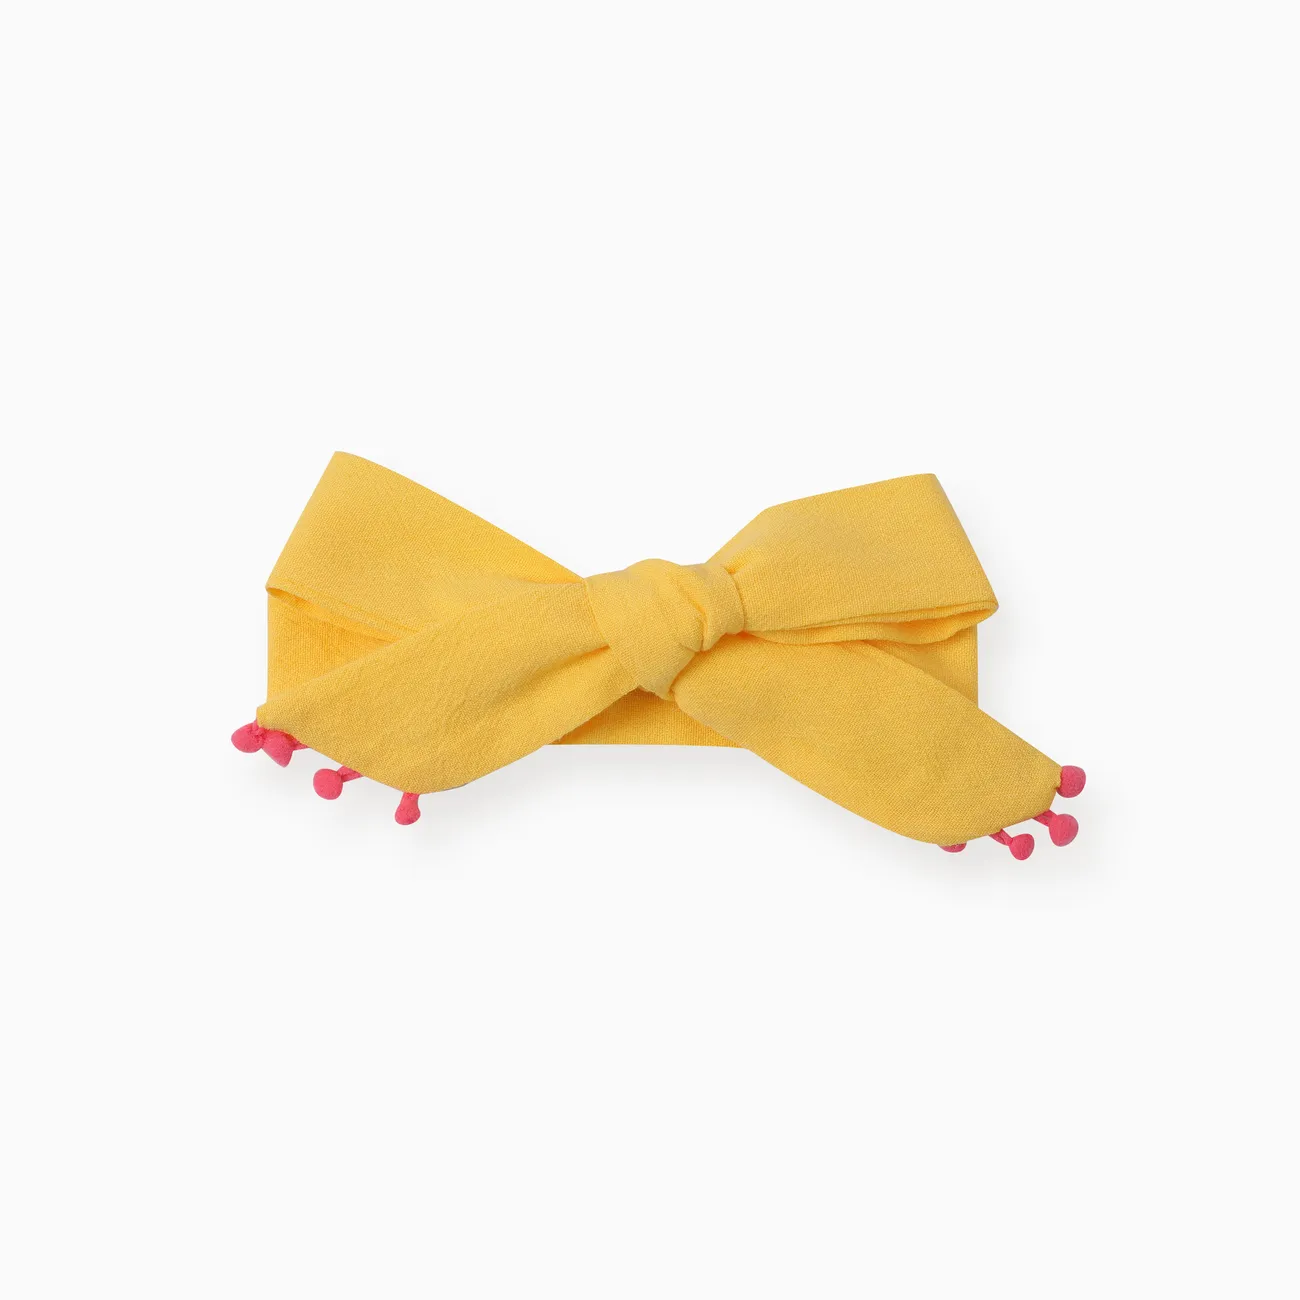 Baby Girl 2pcs Geometric Pattern Flutter Sleeve Jumpsuit and Headband Set Yellow big image 1